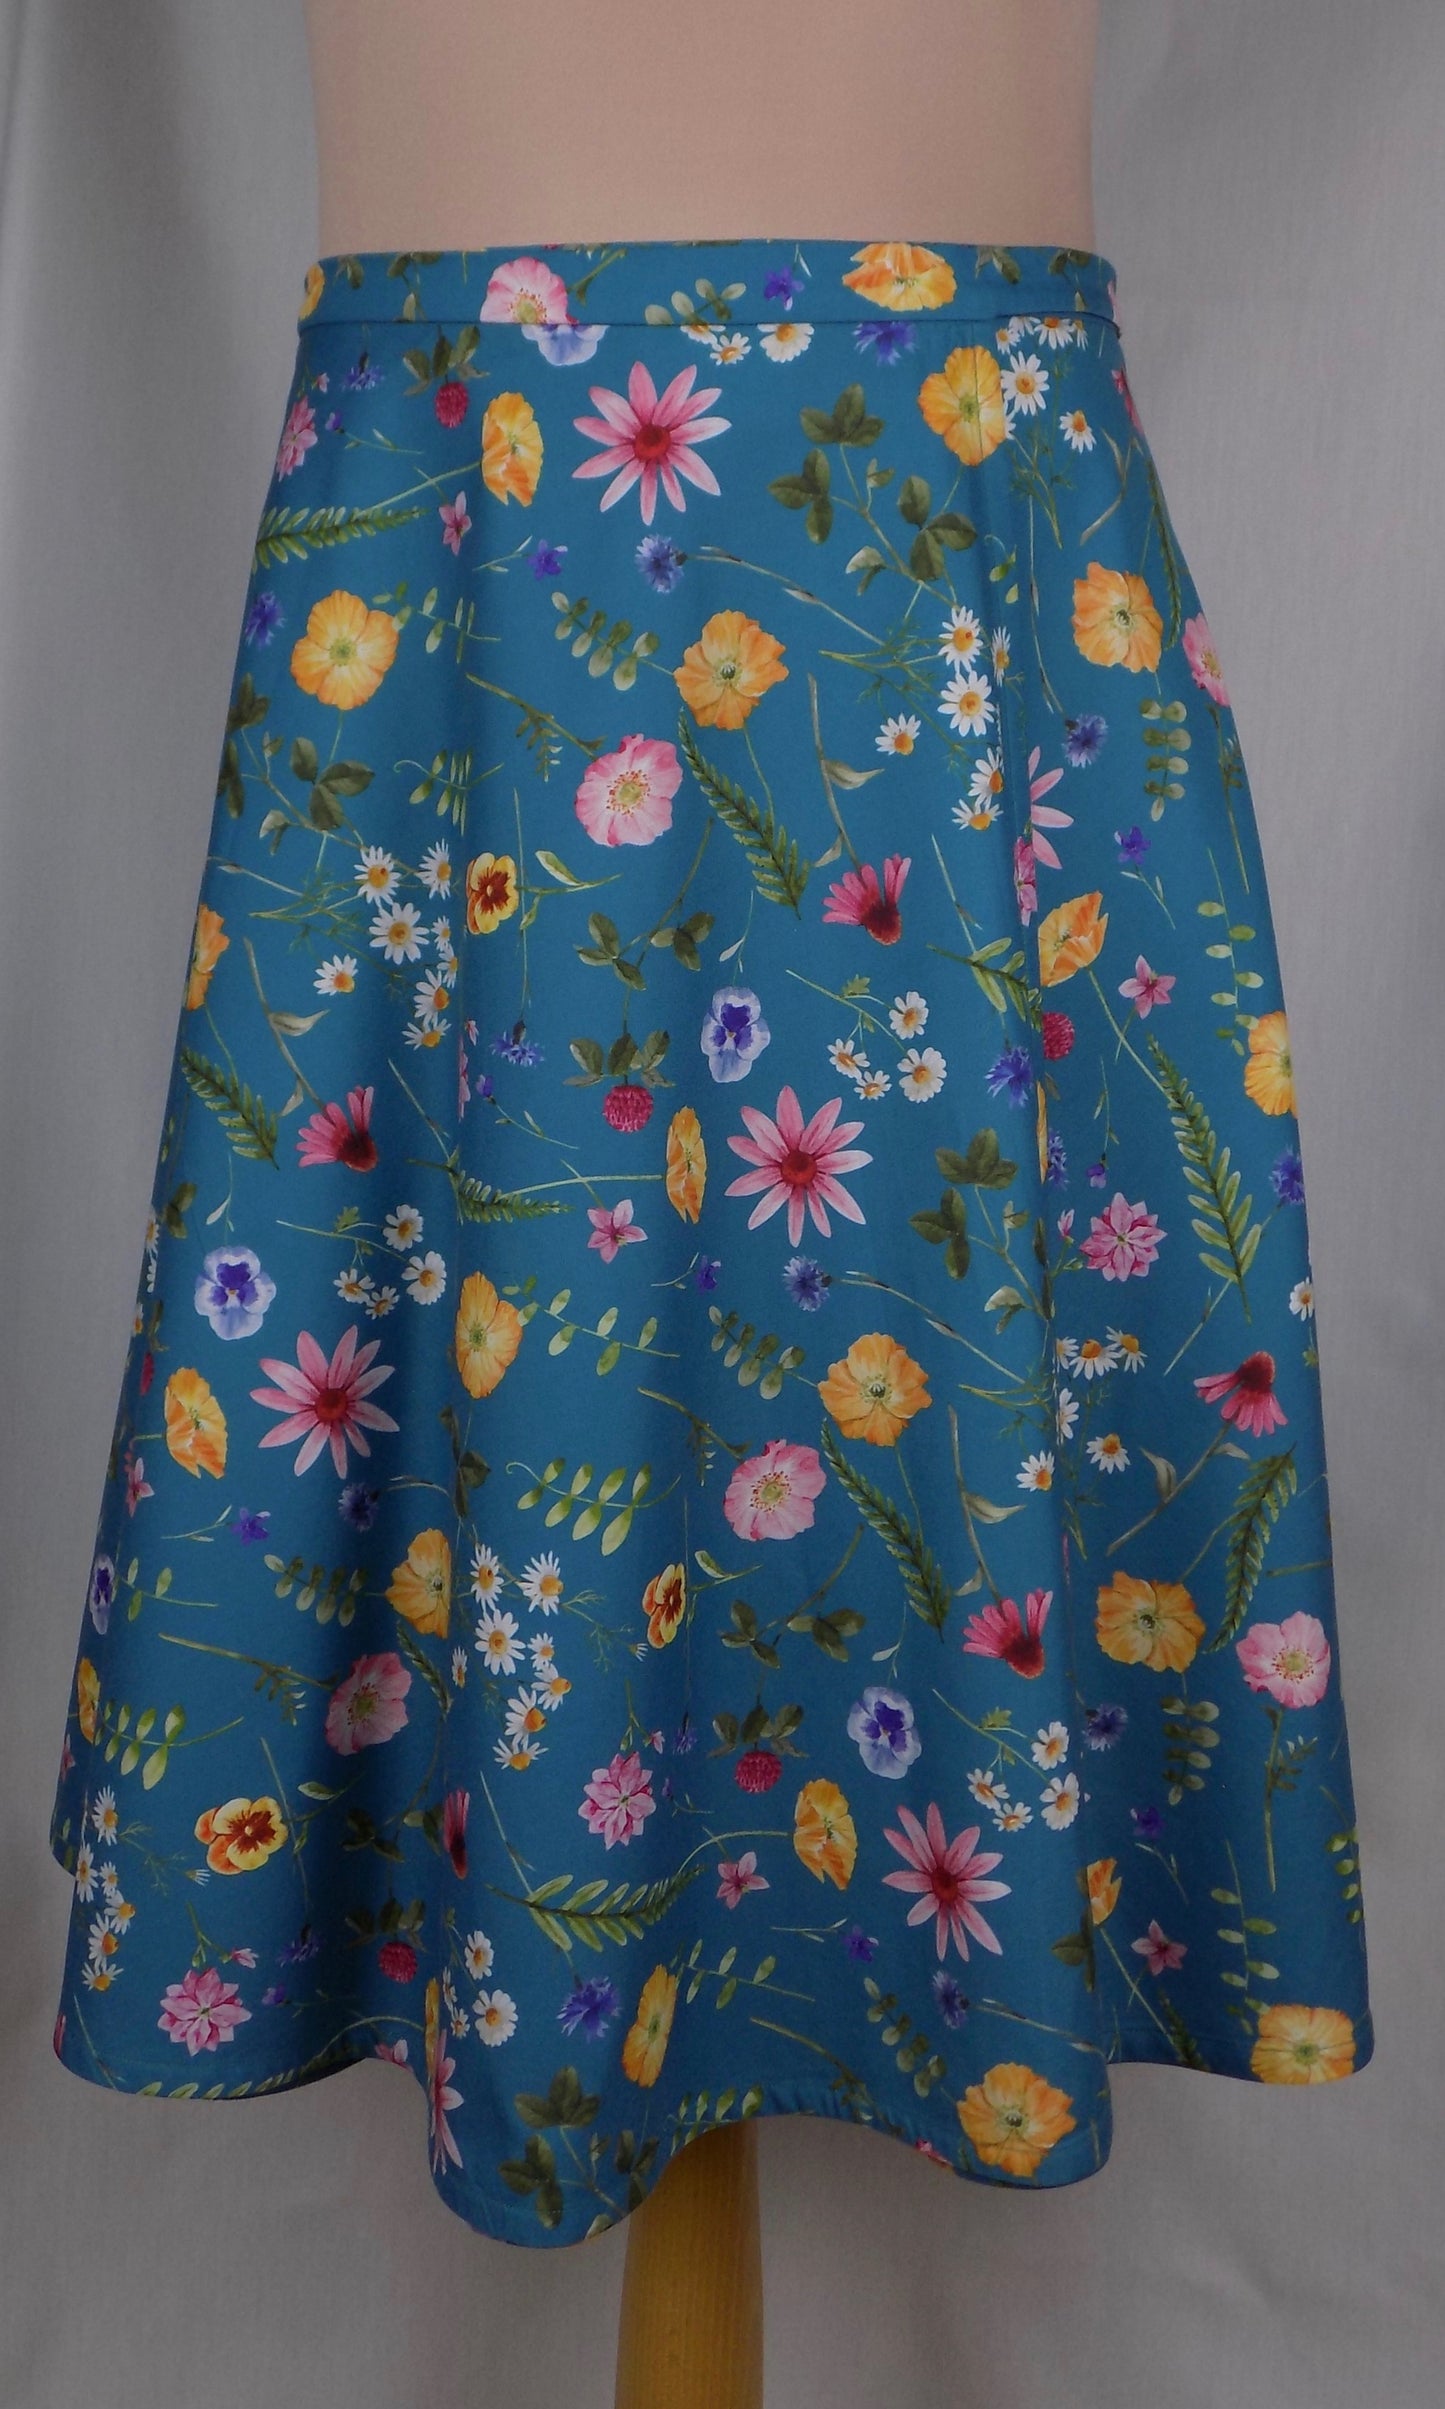 Cotton skirt - Wild flowers on teal